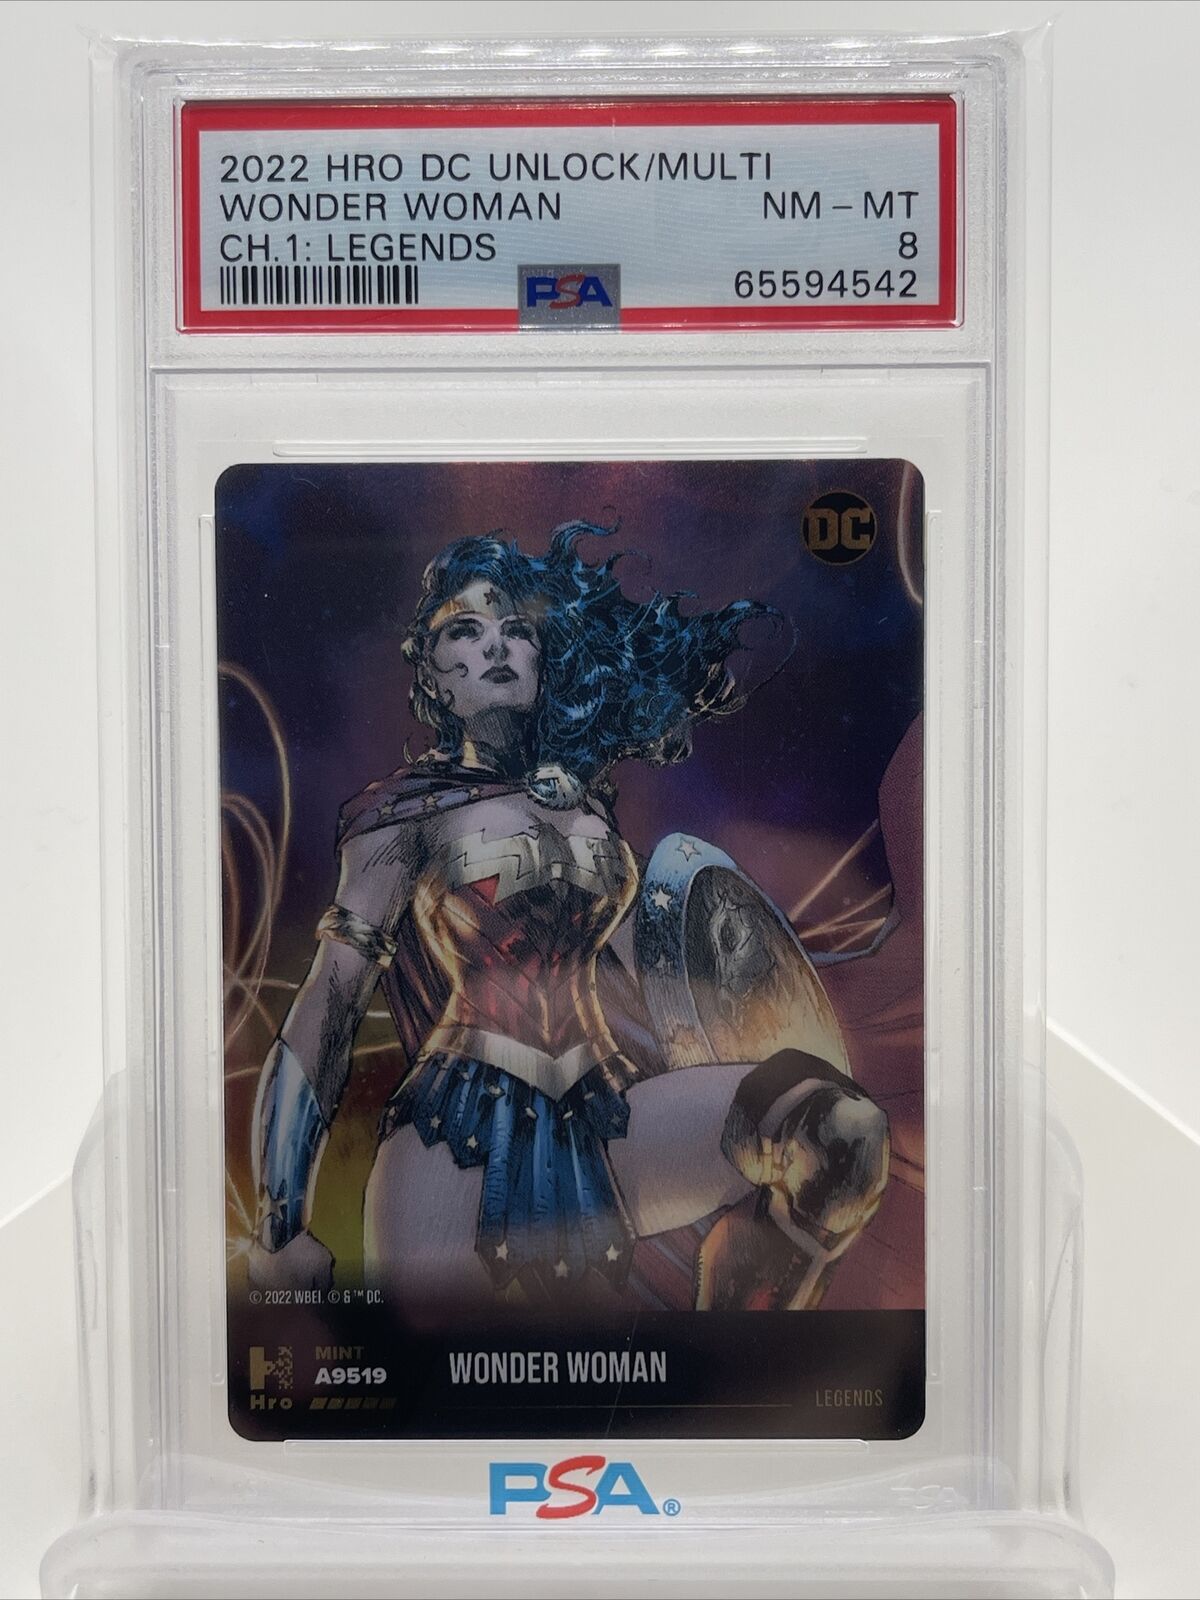 2022 DC Cards PSA 8 Near MINT Wonder Woman Physical Only Legends Low pop